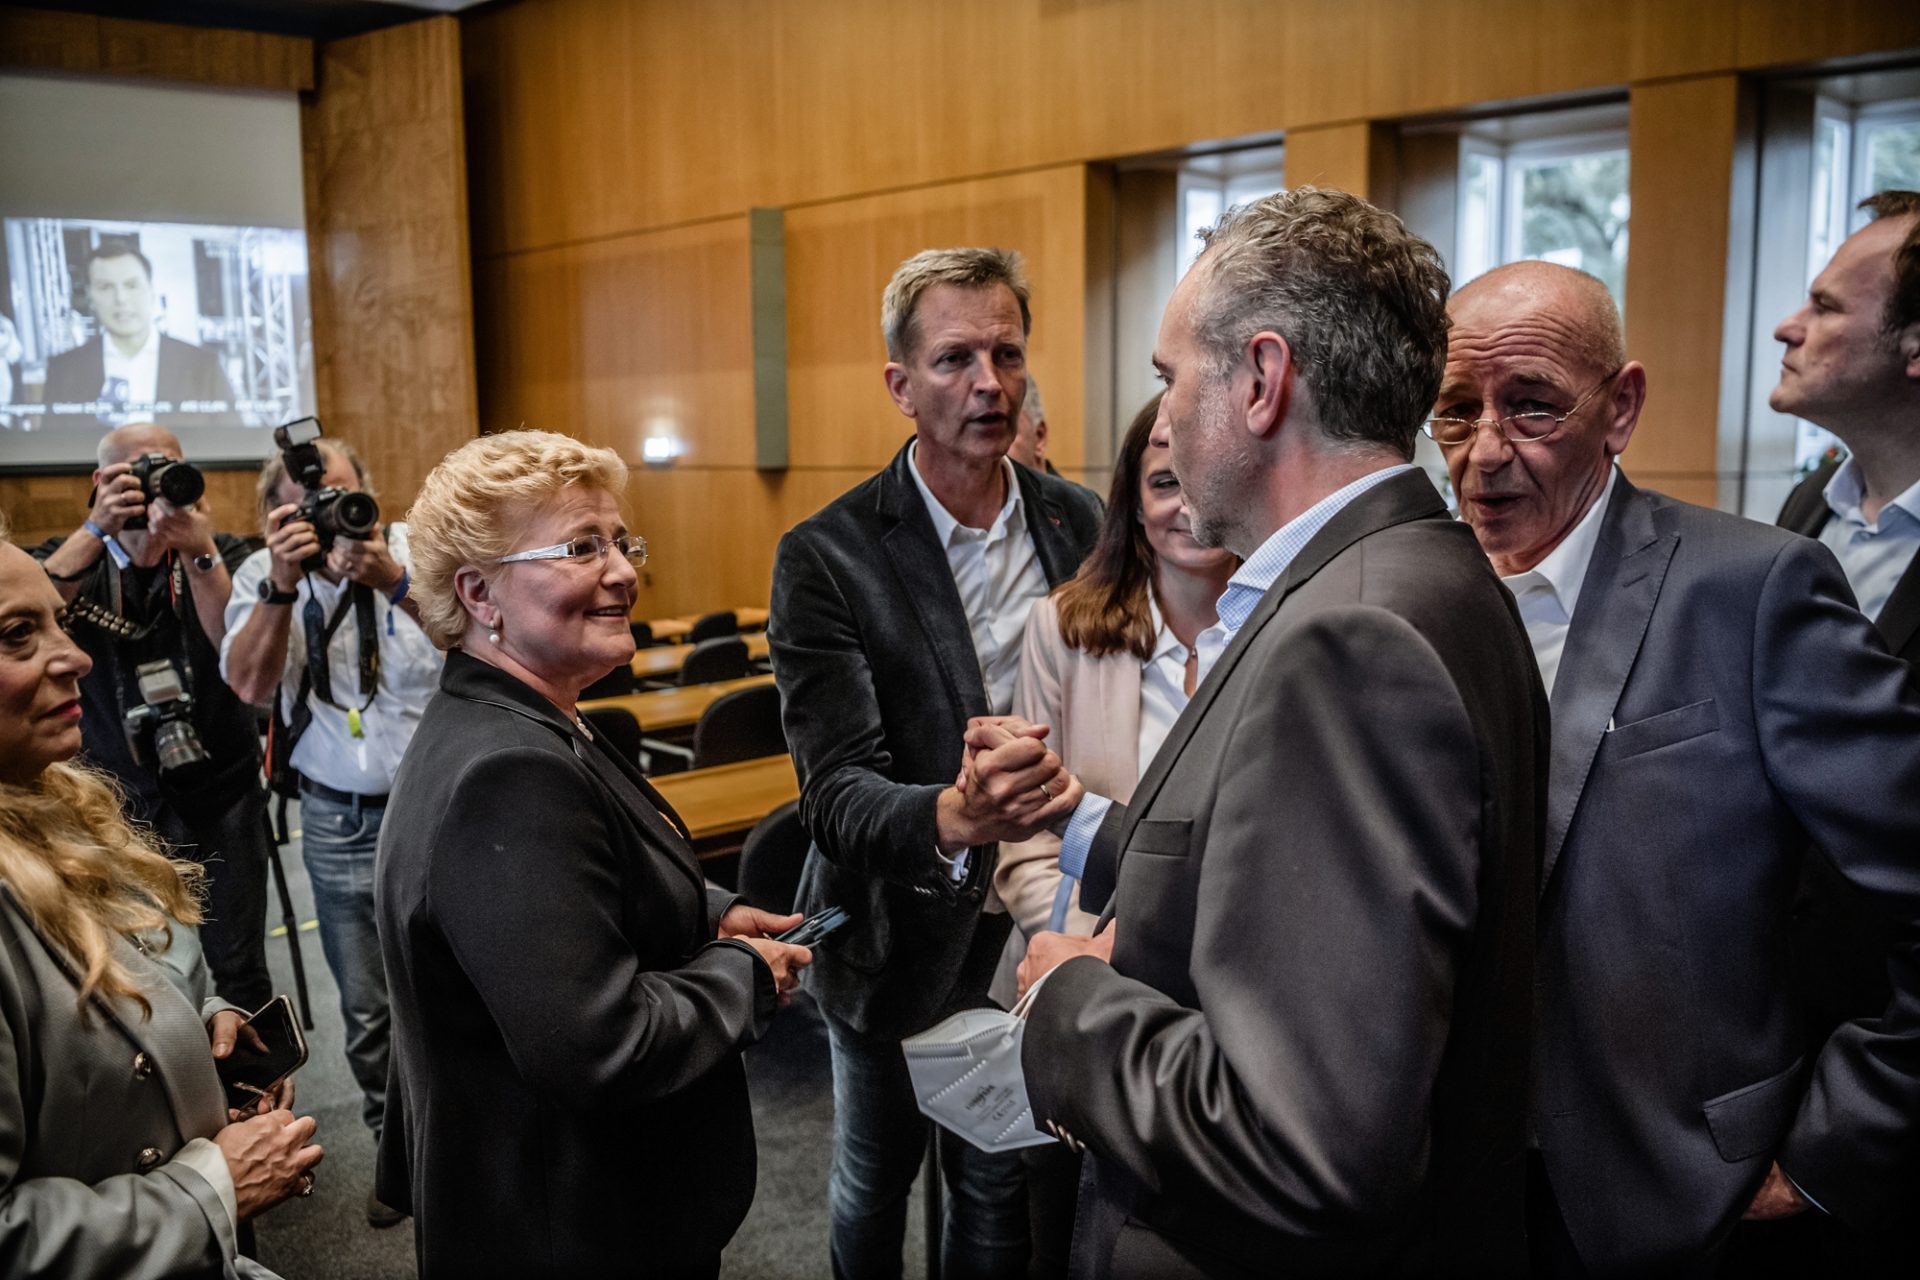 Spitzenvertreter der Düsseldorfer CDU am Wahlabend: Sylvia Pantel, Josef Hinkel, Thomas Jarzombek und Rolf Tups (von links). Foto: Andreas Endermann